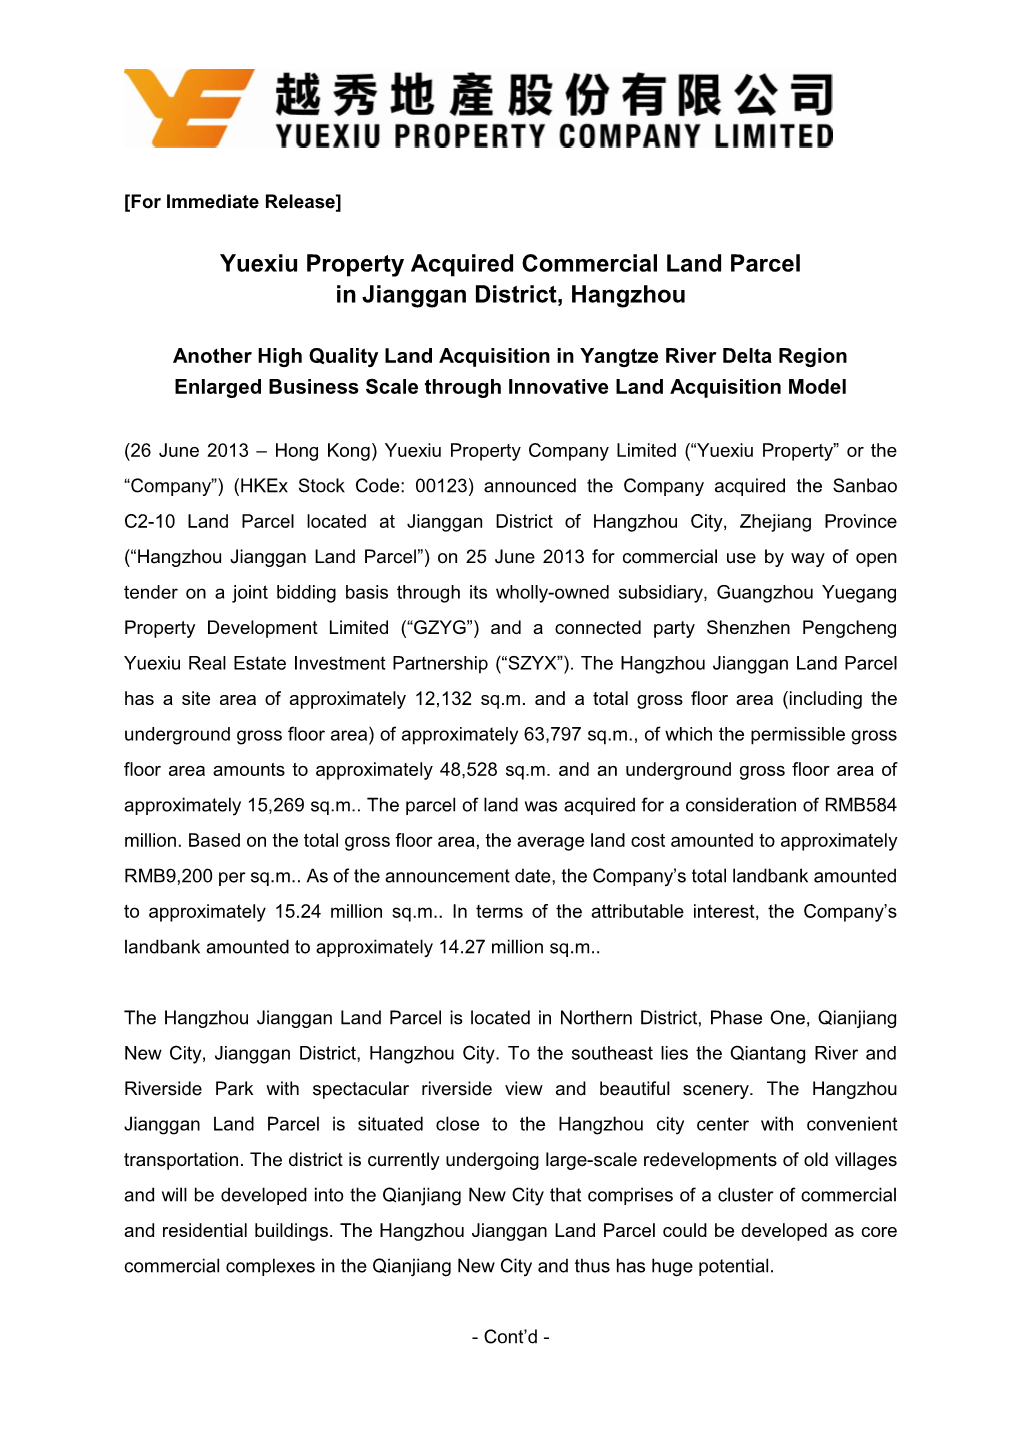 Yuexiu Property Acquired Commercial Land Parcel in Jianggan District, Hangzhou